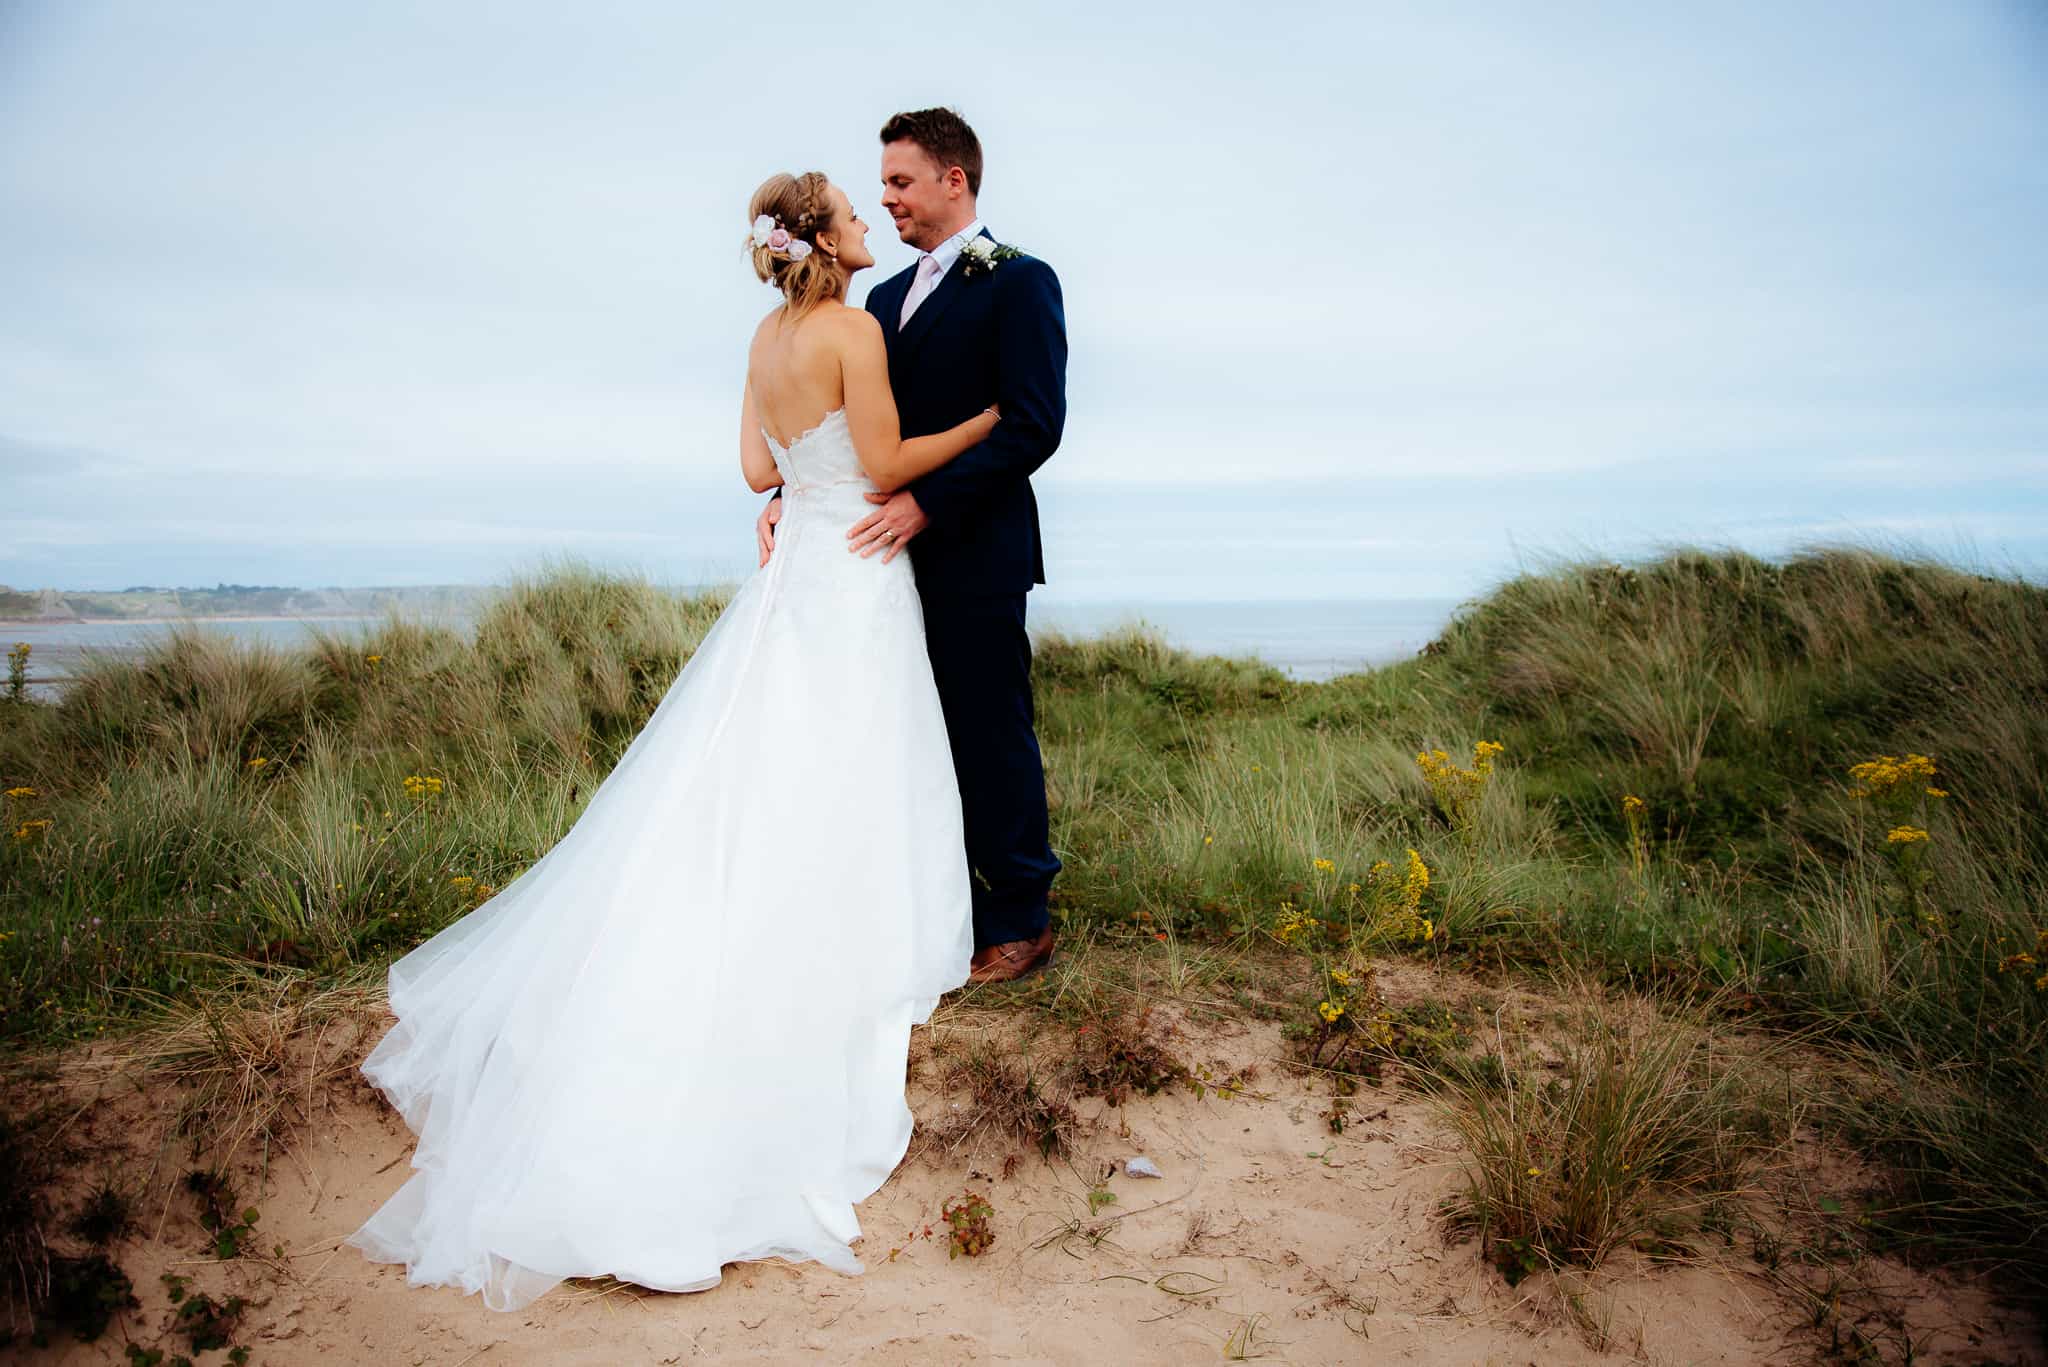 Dan & Lilli | Swansea wedding